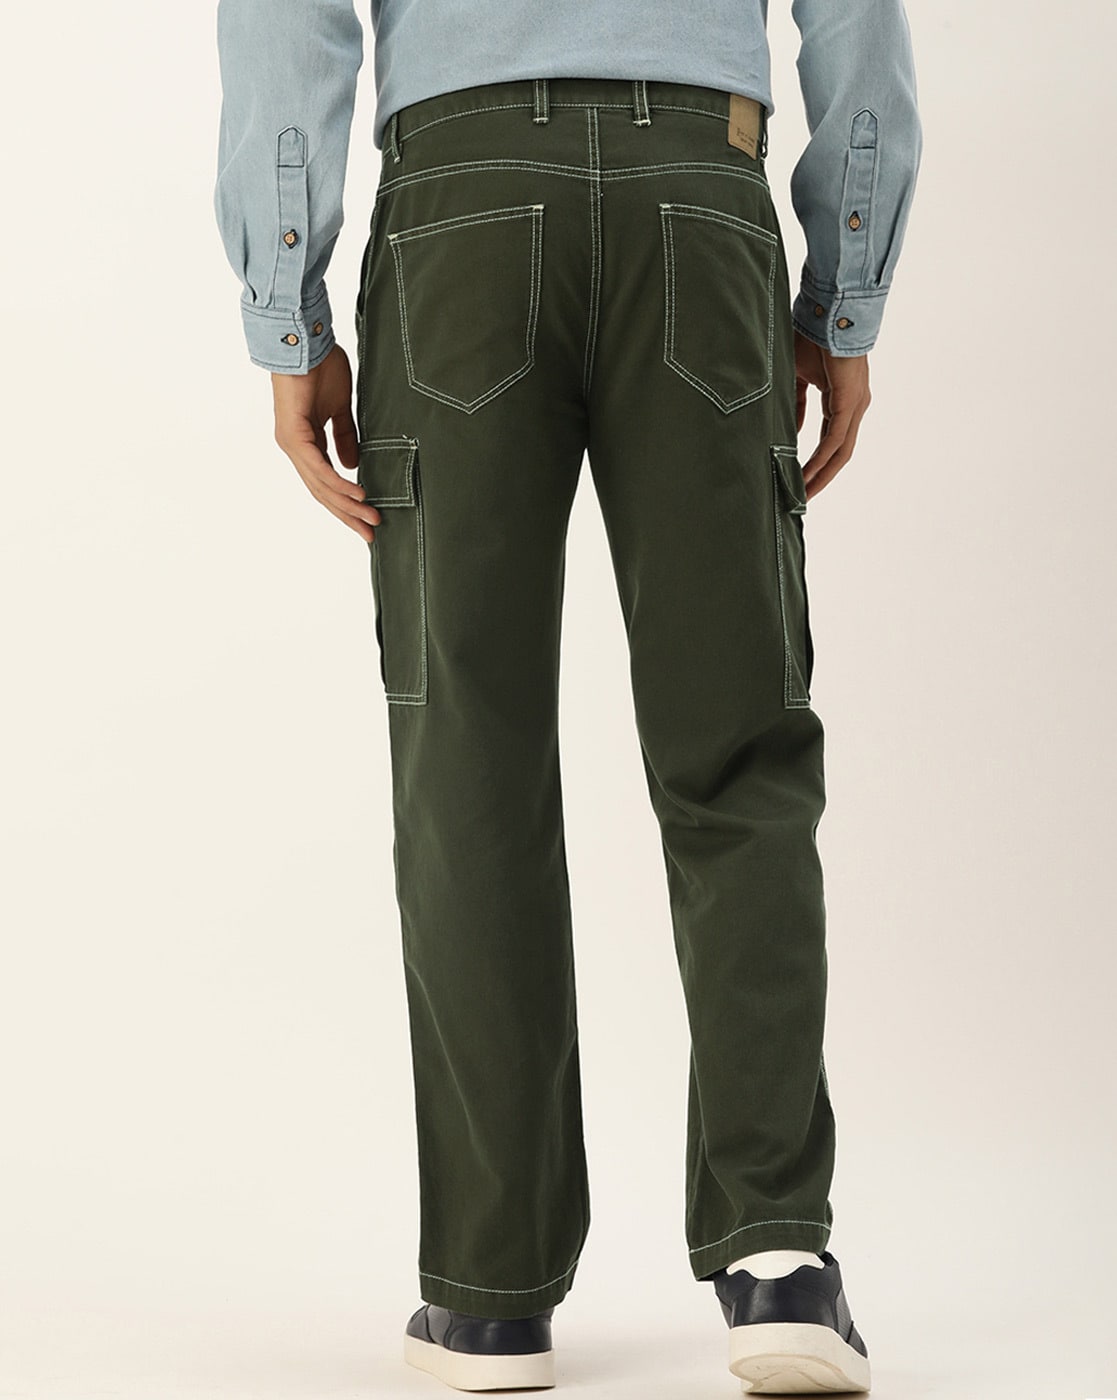 Military Style Camo BDU Pants